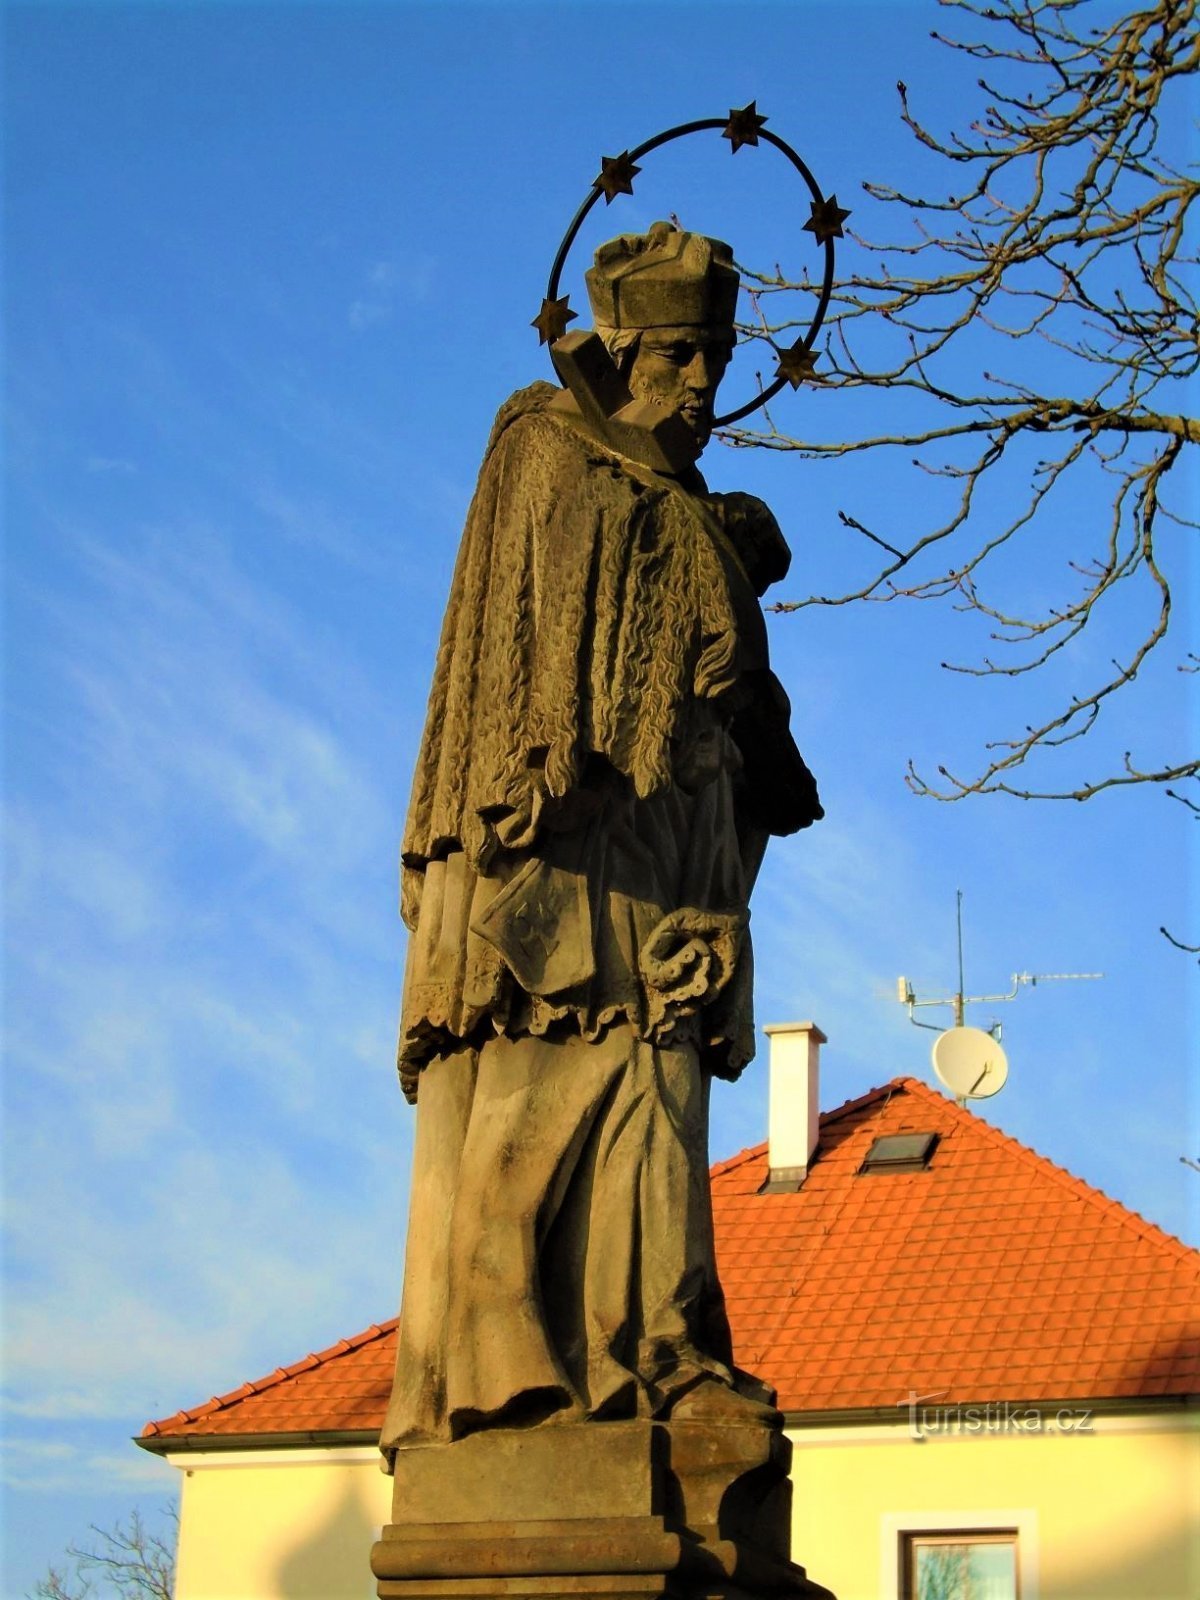 Statue of St. John of Nepomuck in Pouchov (Hradec Králové, 13.2.2018/XNUMX/XNUMX)